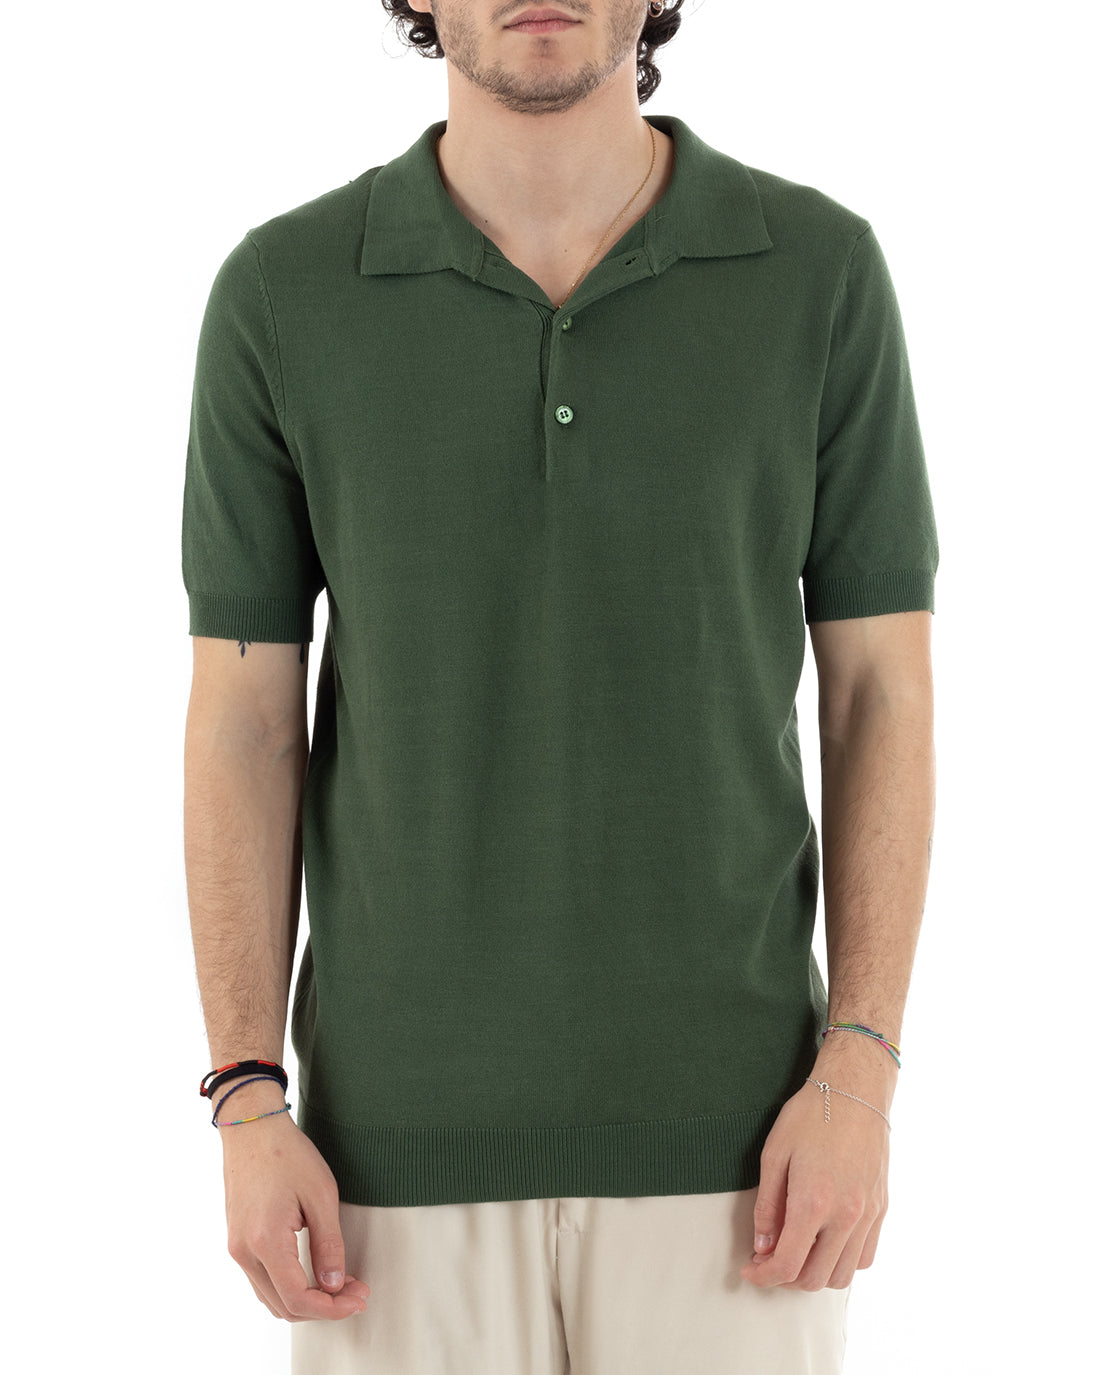 Polo T-Shirt Uomo Manica Corta Tinta Unita Verde Filo Casual GIOSAL-TS2789A